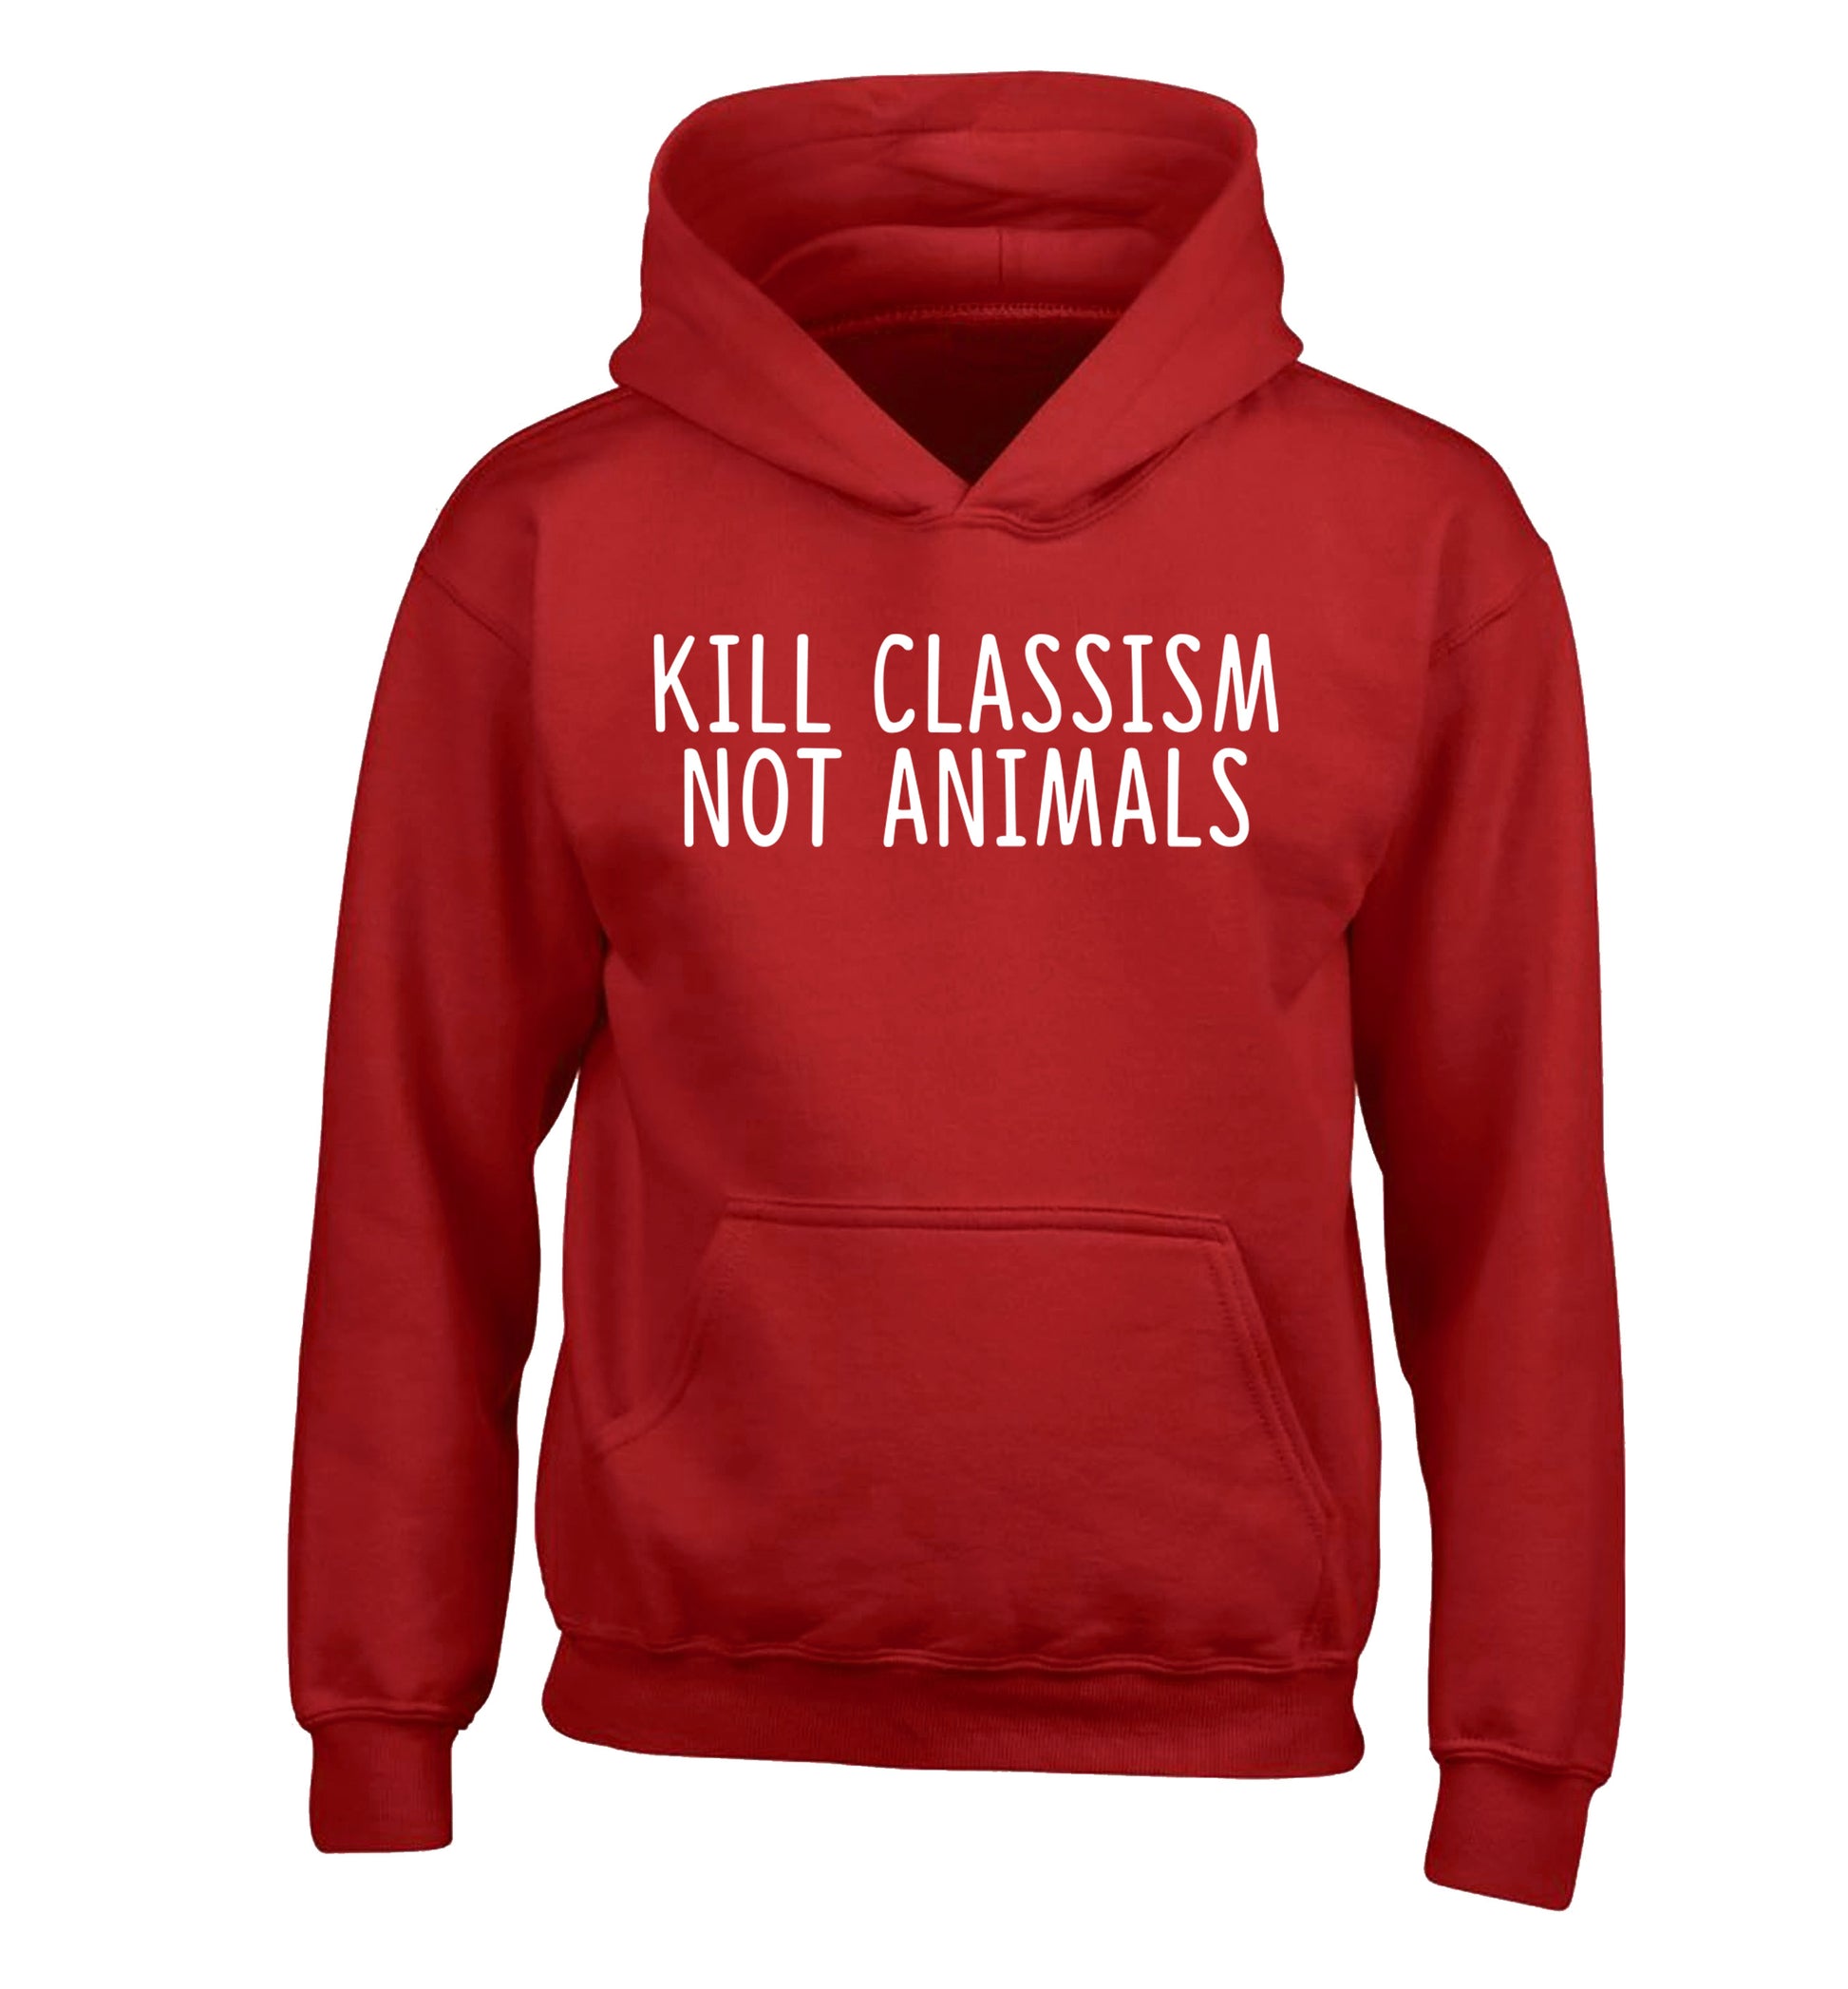 Kill Classism Not Animals children's red hoodie 12-13 Years